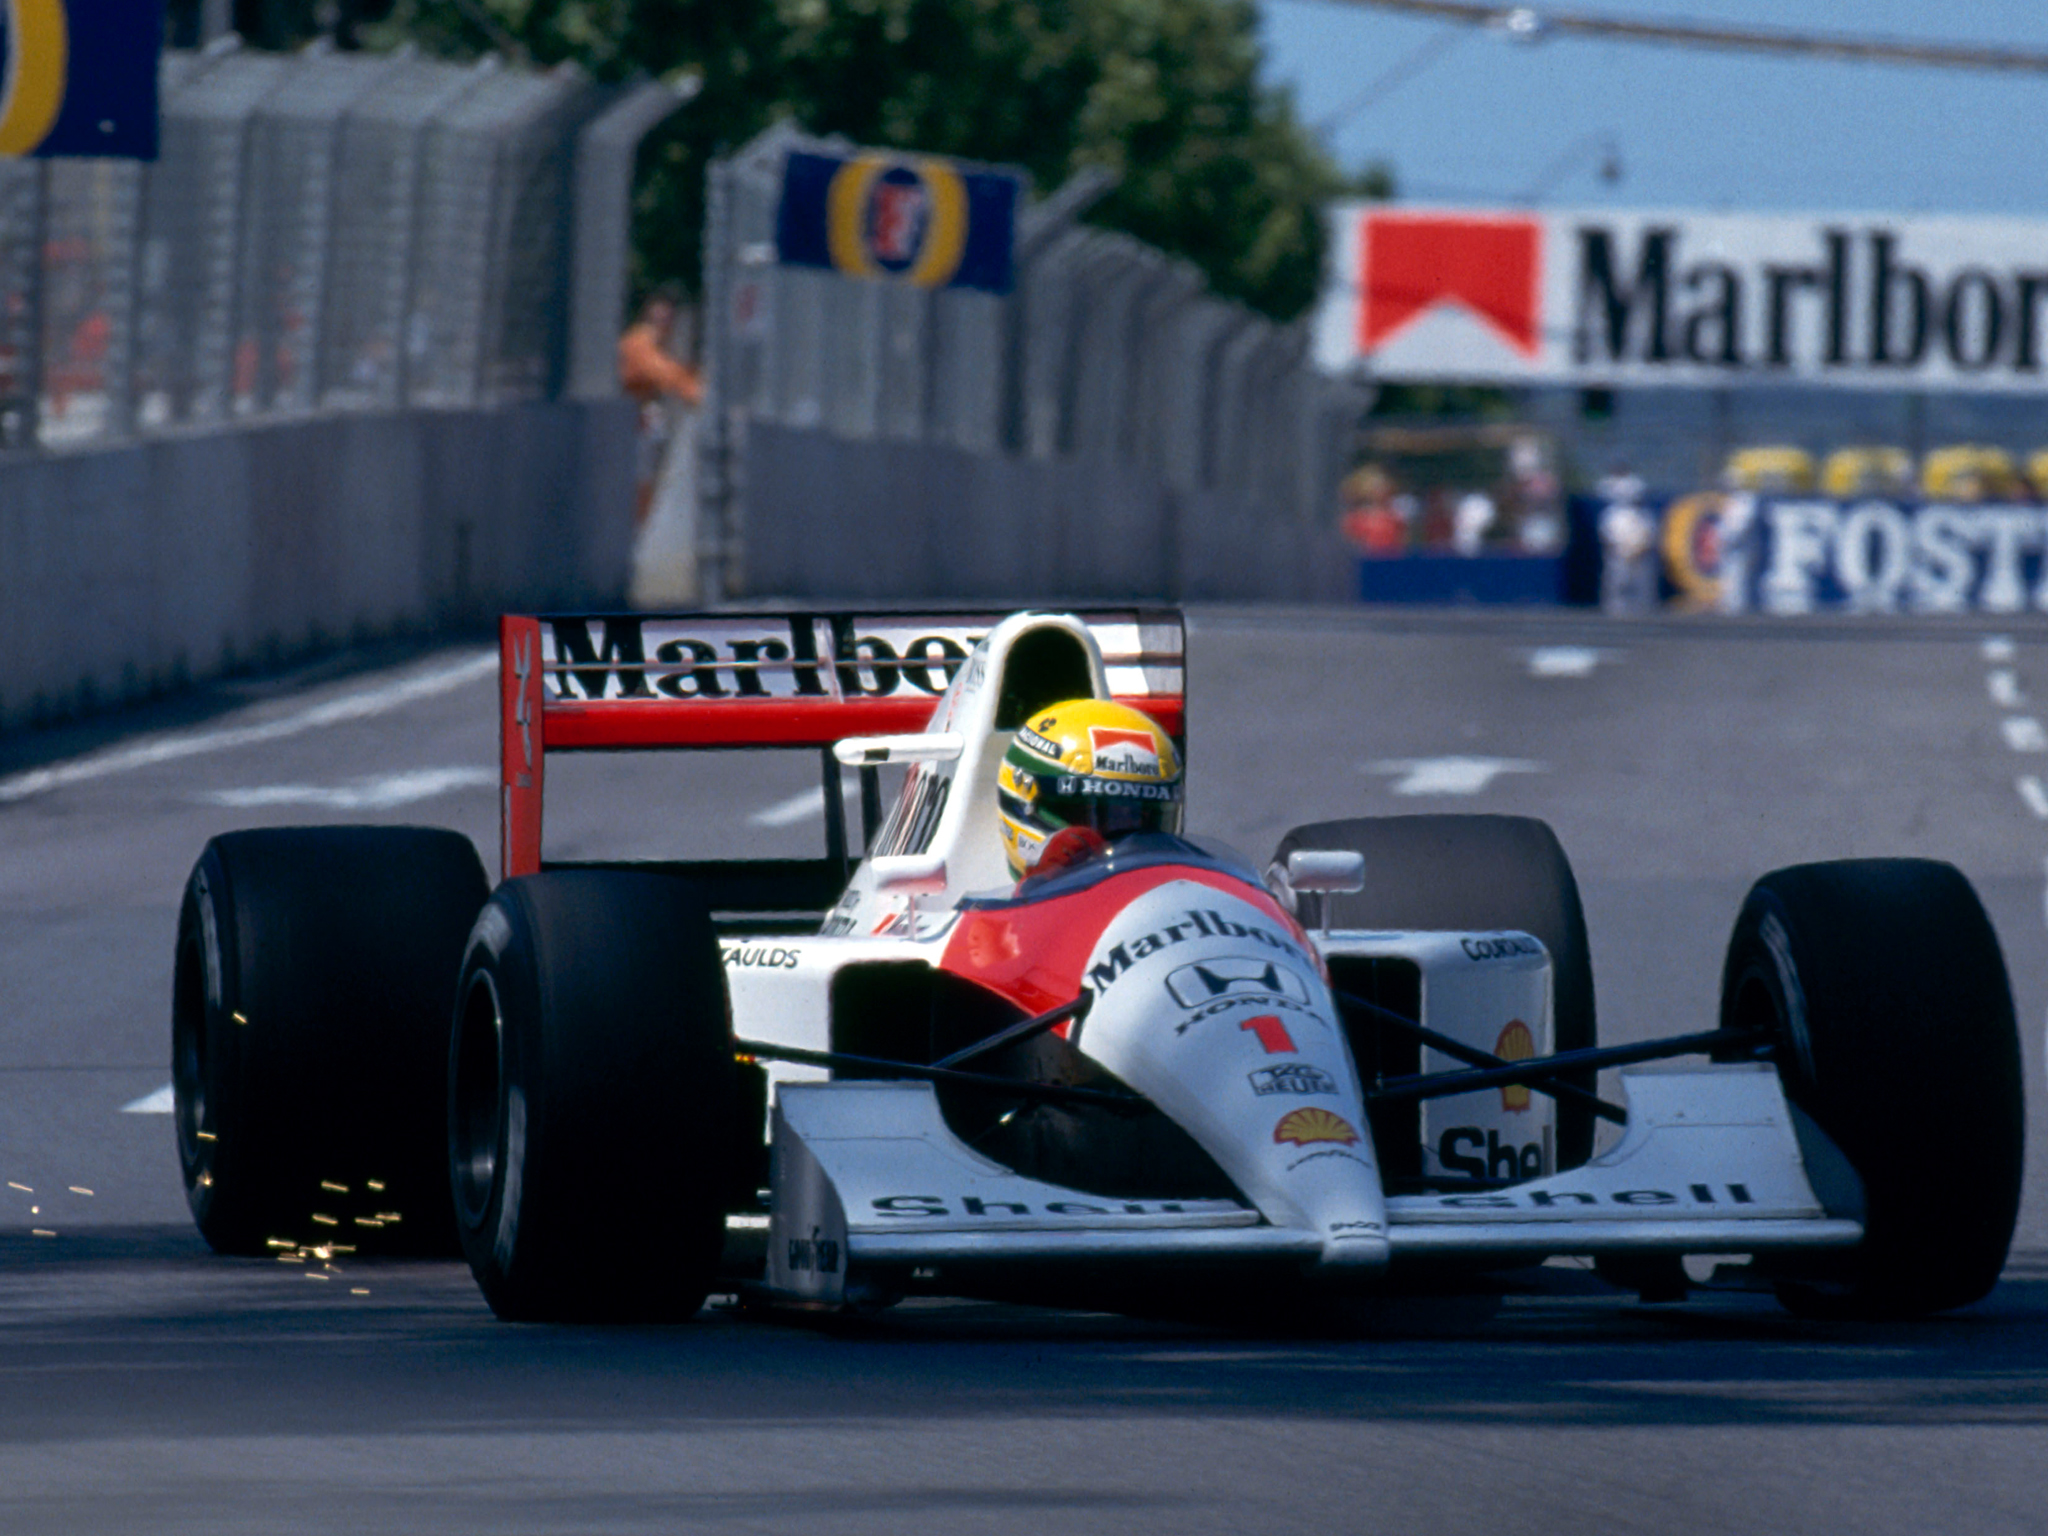 1991 Mclaren Honda Mp4 6 Formula One F 1 Race Racing Wallpapers Hd Desktop And Mobile Backgrounds